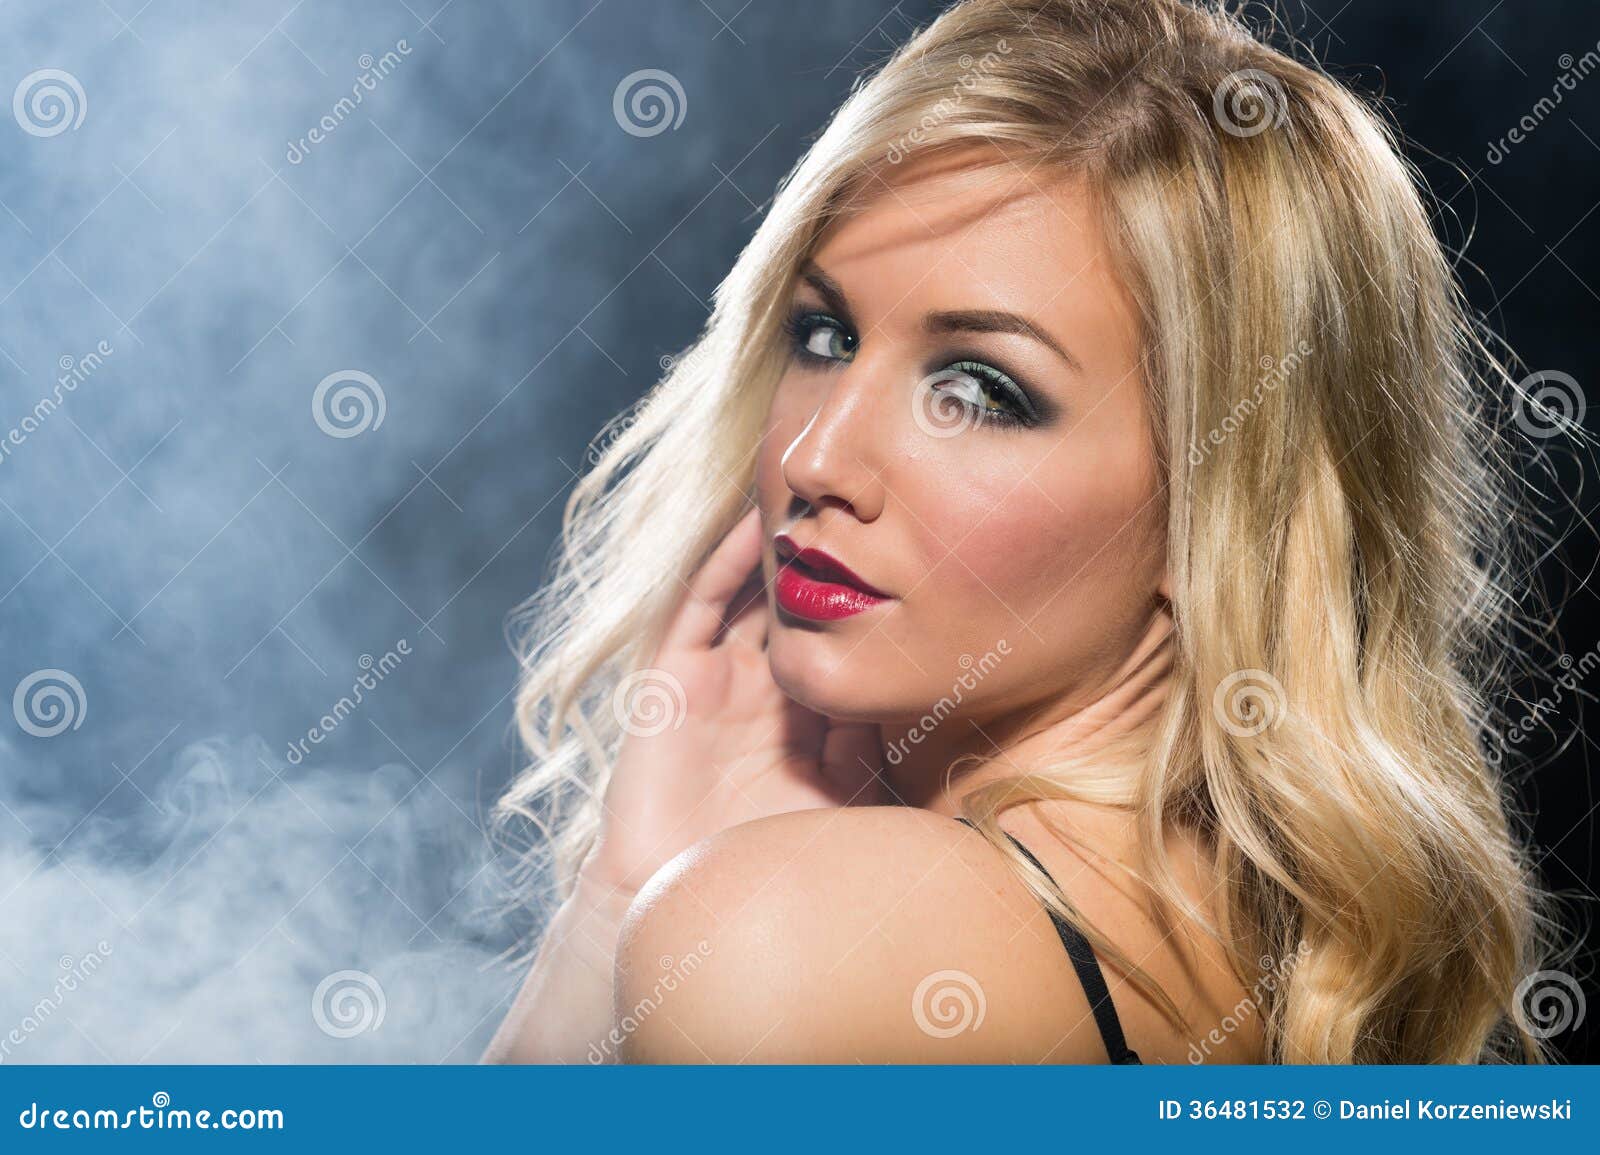 Blonde woman looking over her shoulder - wide 2